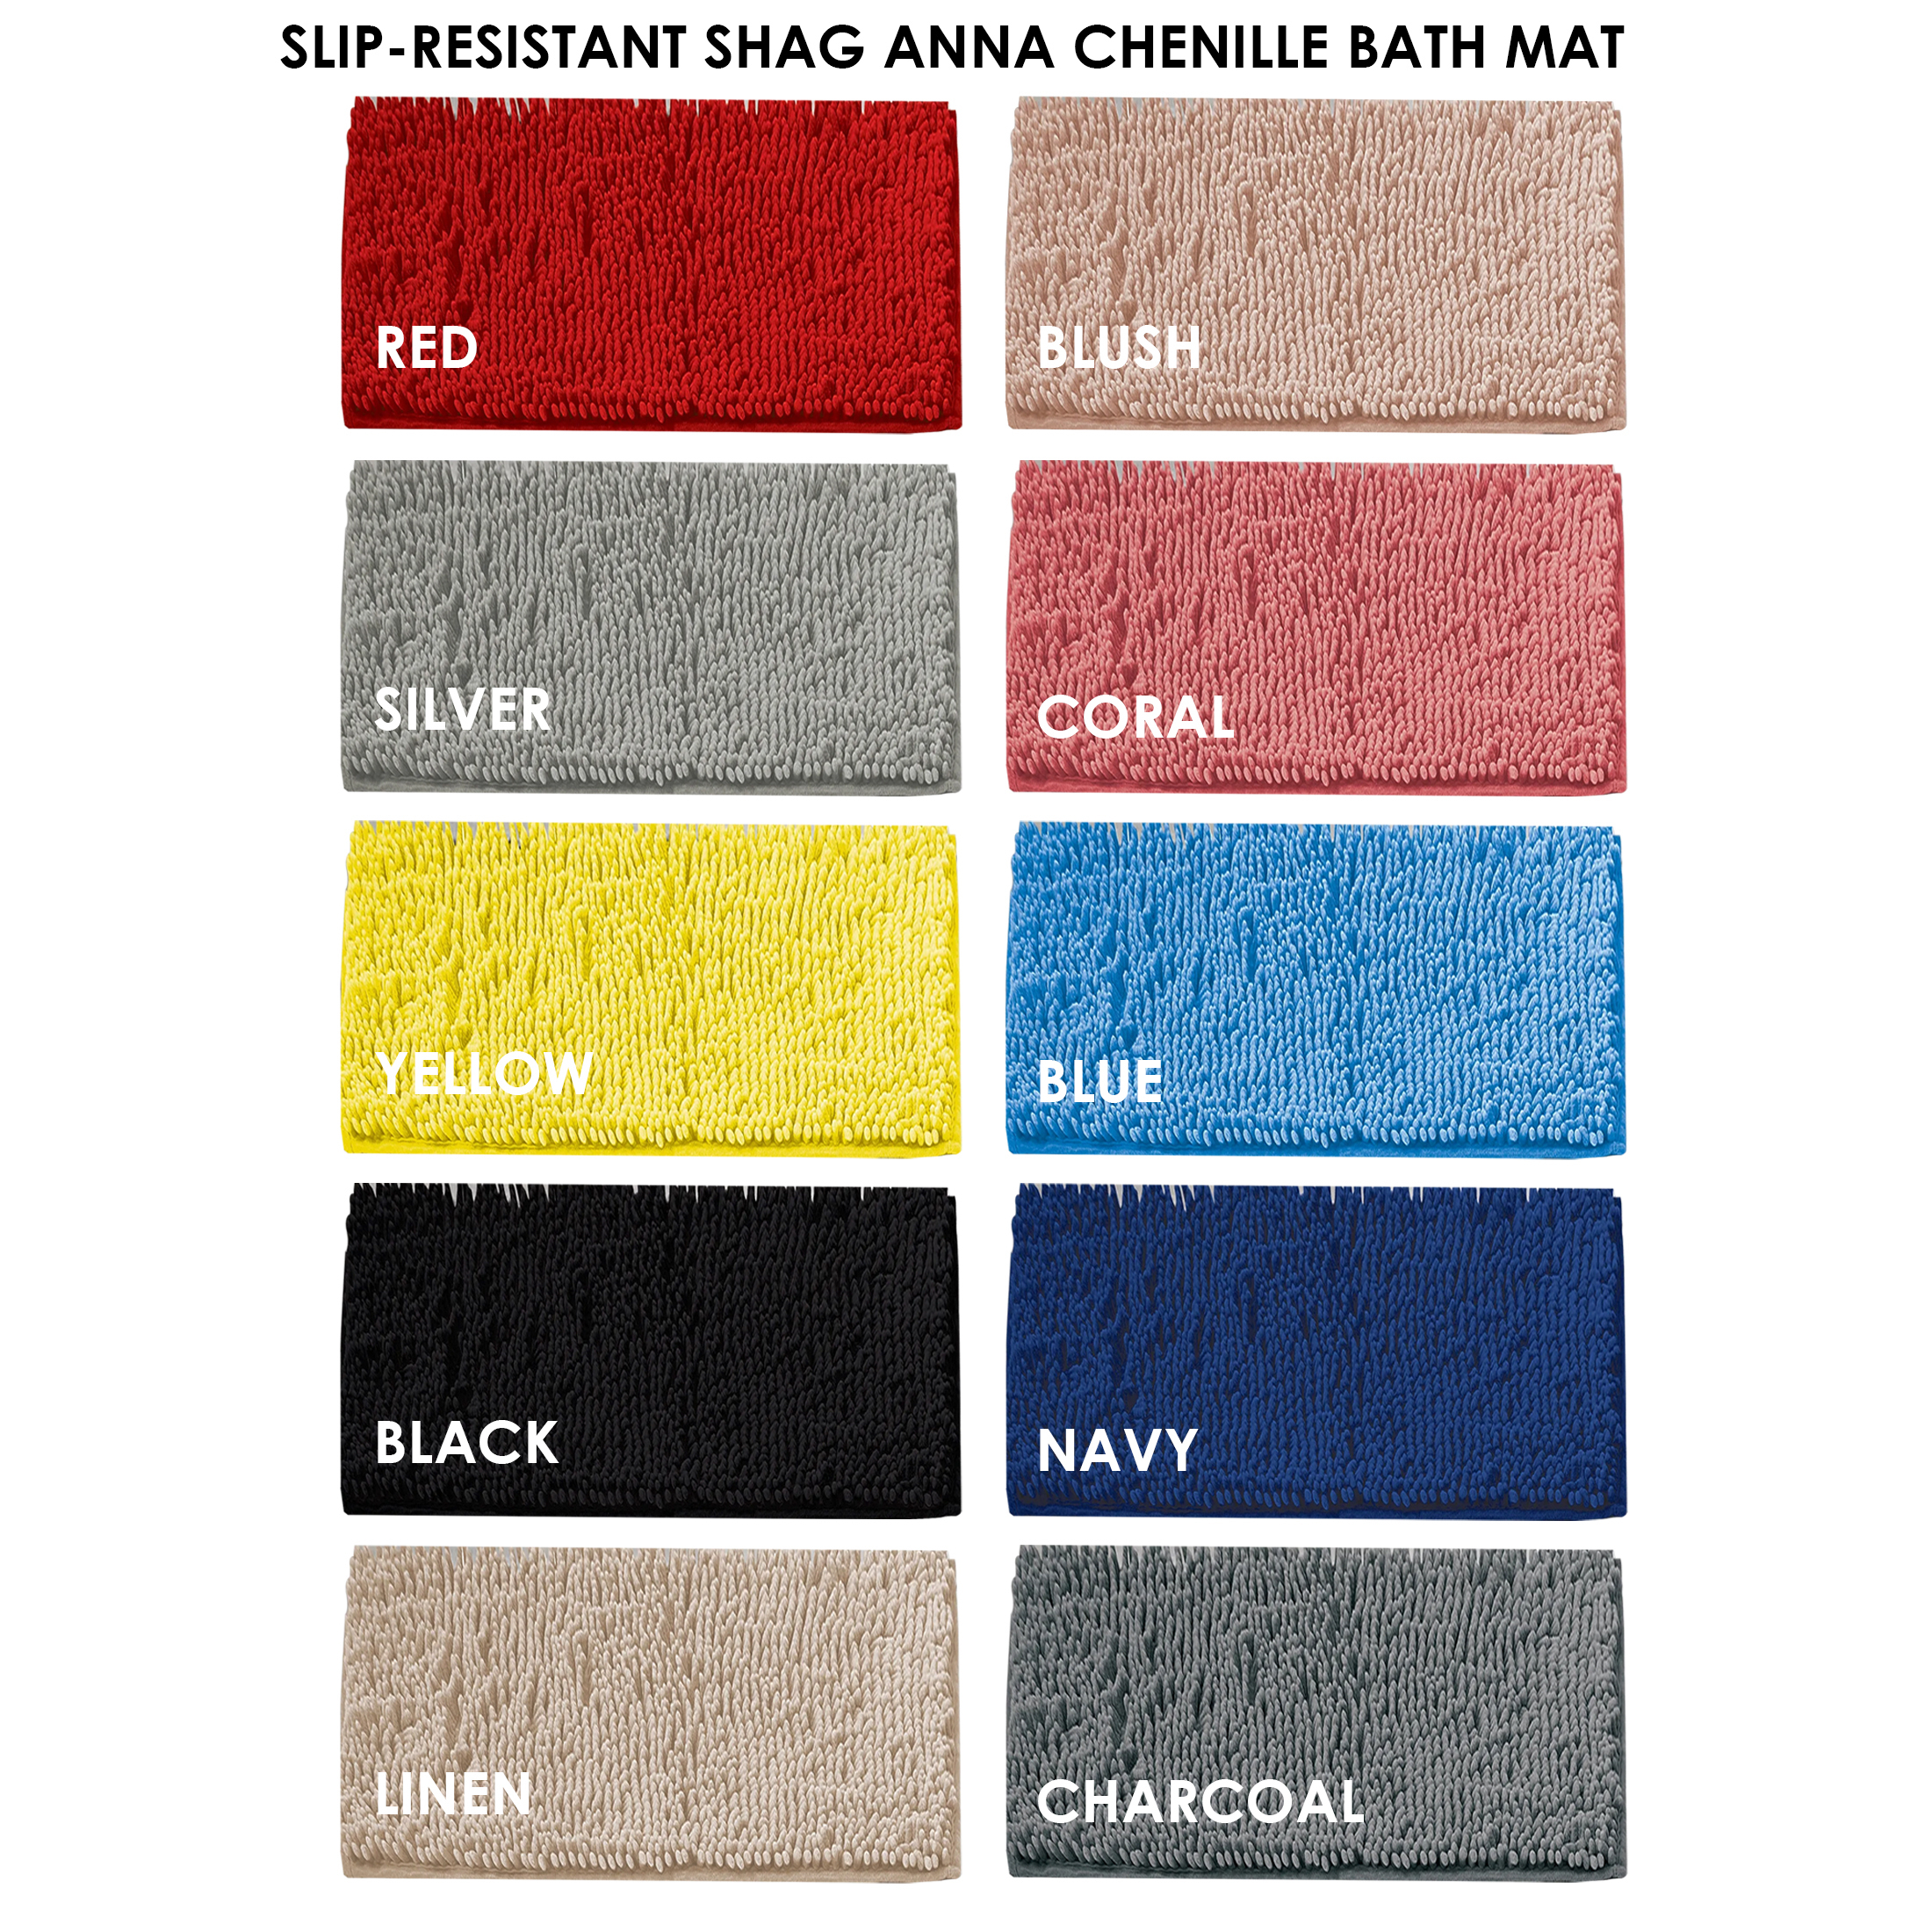 Slip-Resistant Shag Anna Chenille Soft Absorbent Bath Mat Bathroom Rug 17 X 24 - Coral